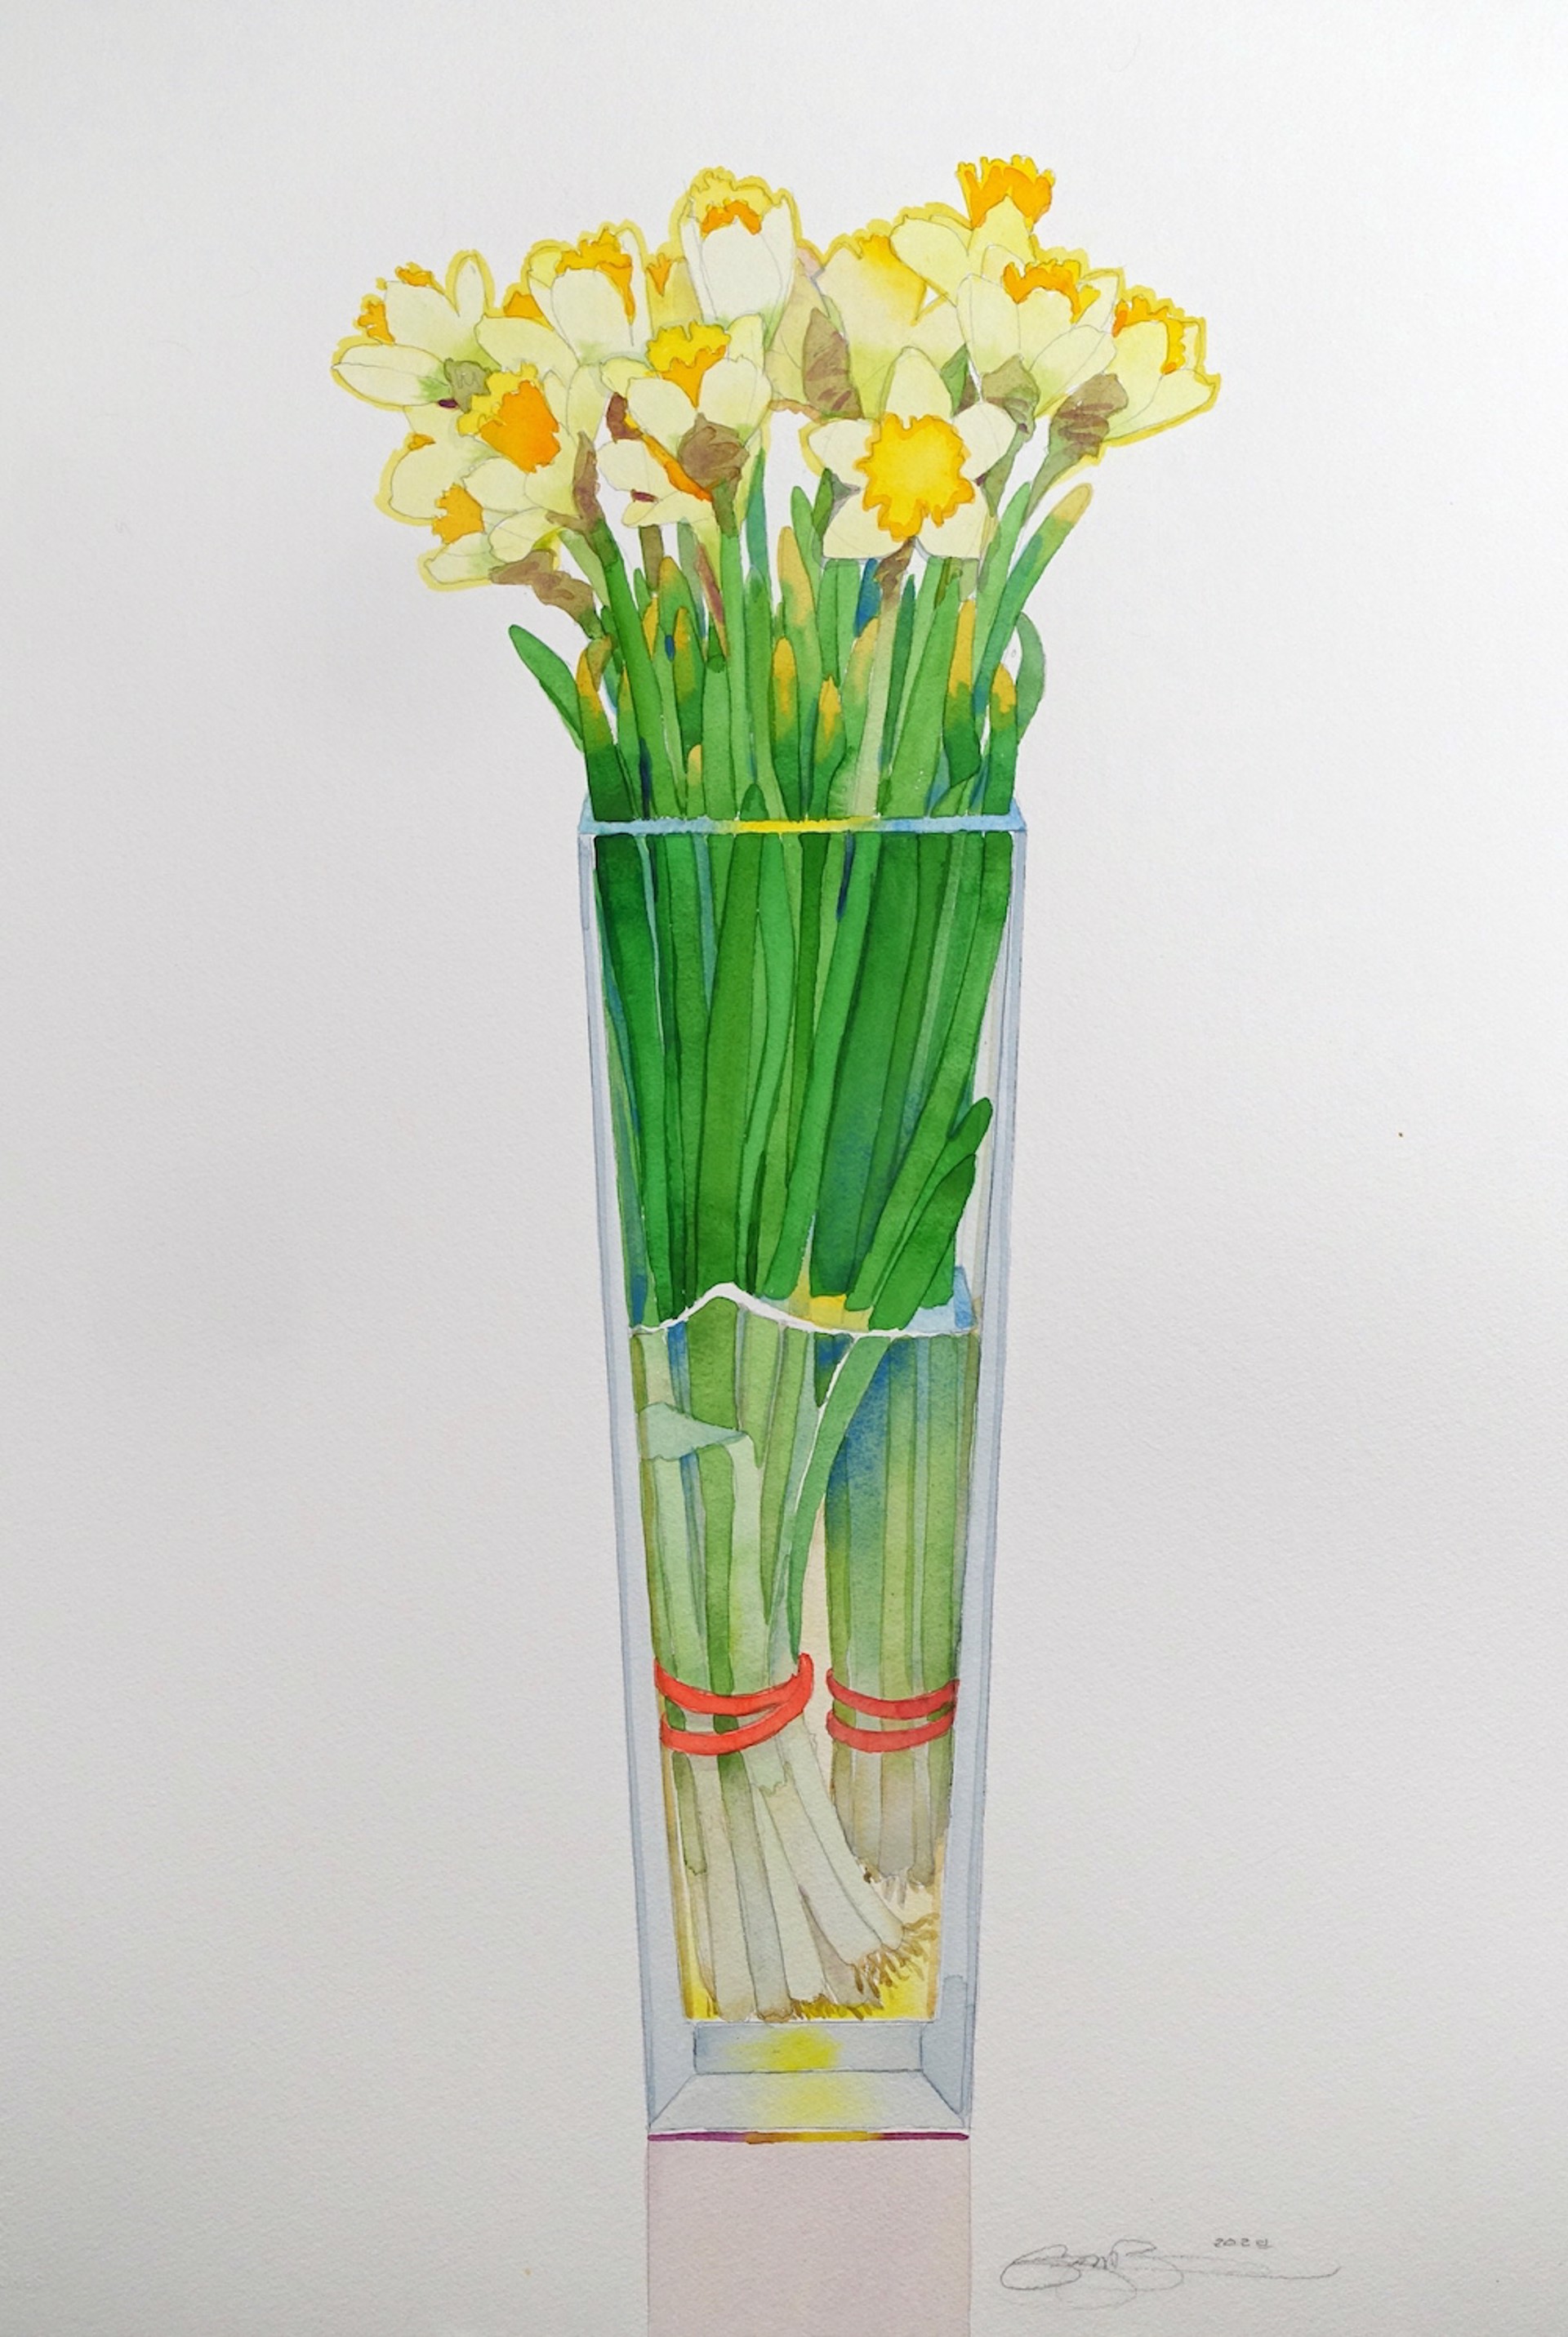 Daffodils in a Tall Vase by Gary Bukovnik